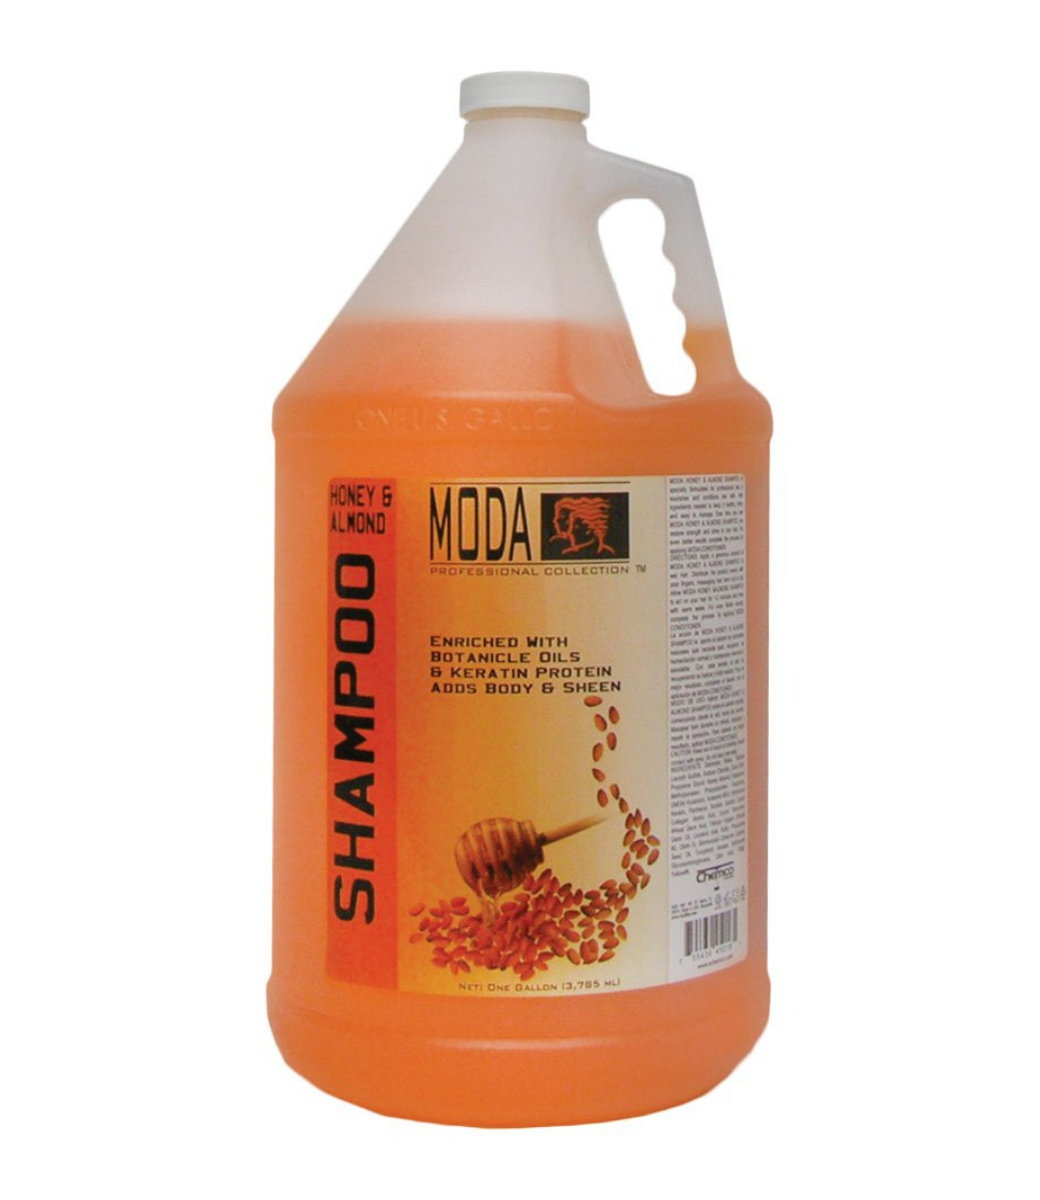 MODA PROFESSIONAL COLLECTION MODA Honey & Almond Shampoo, 128oz - 45015